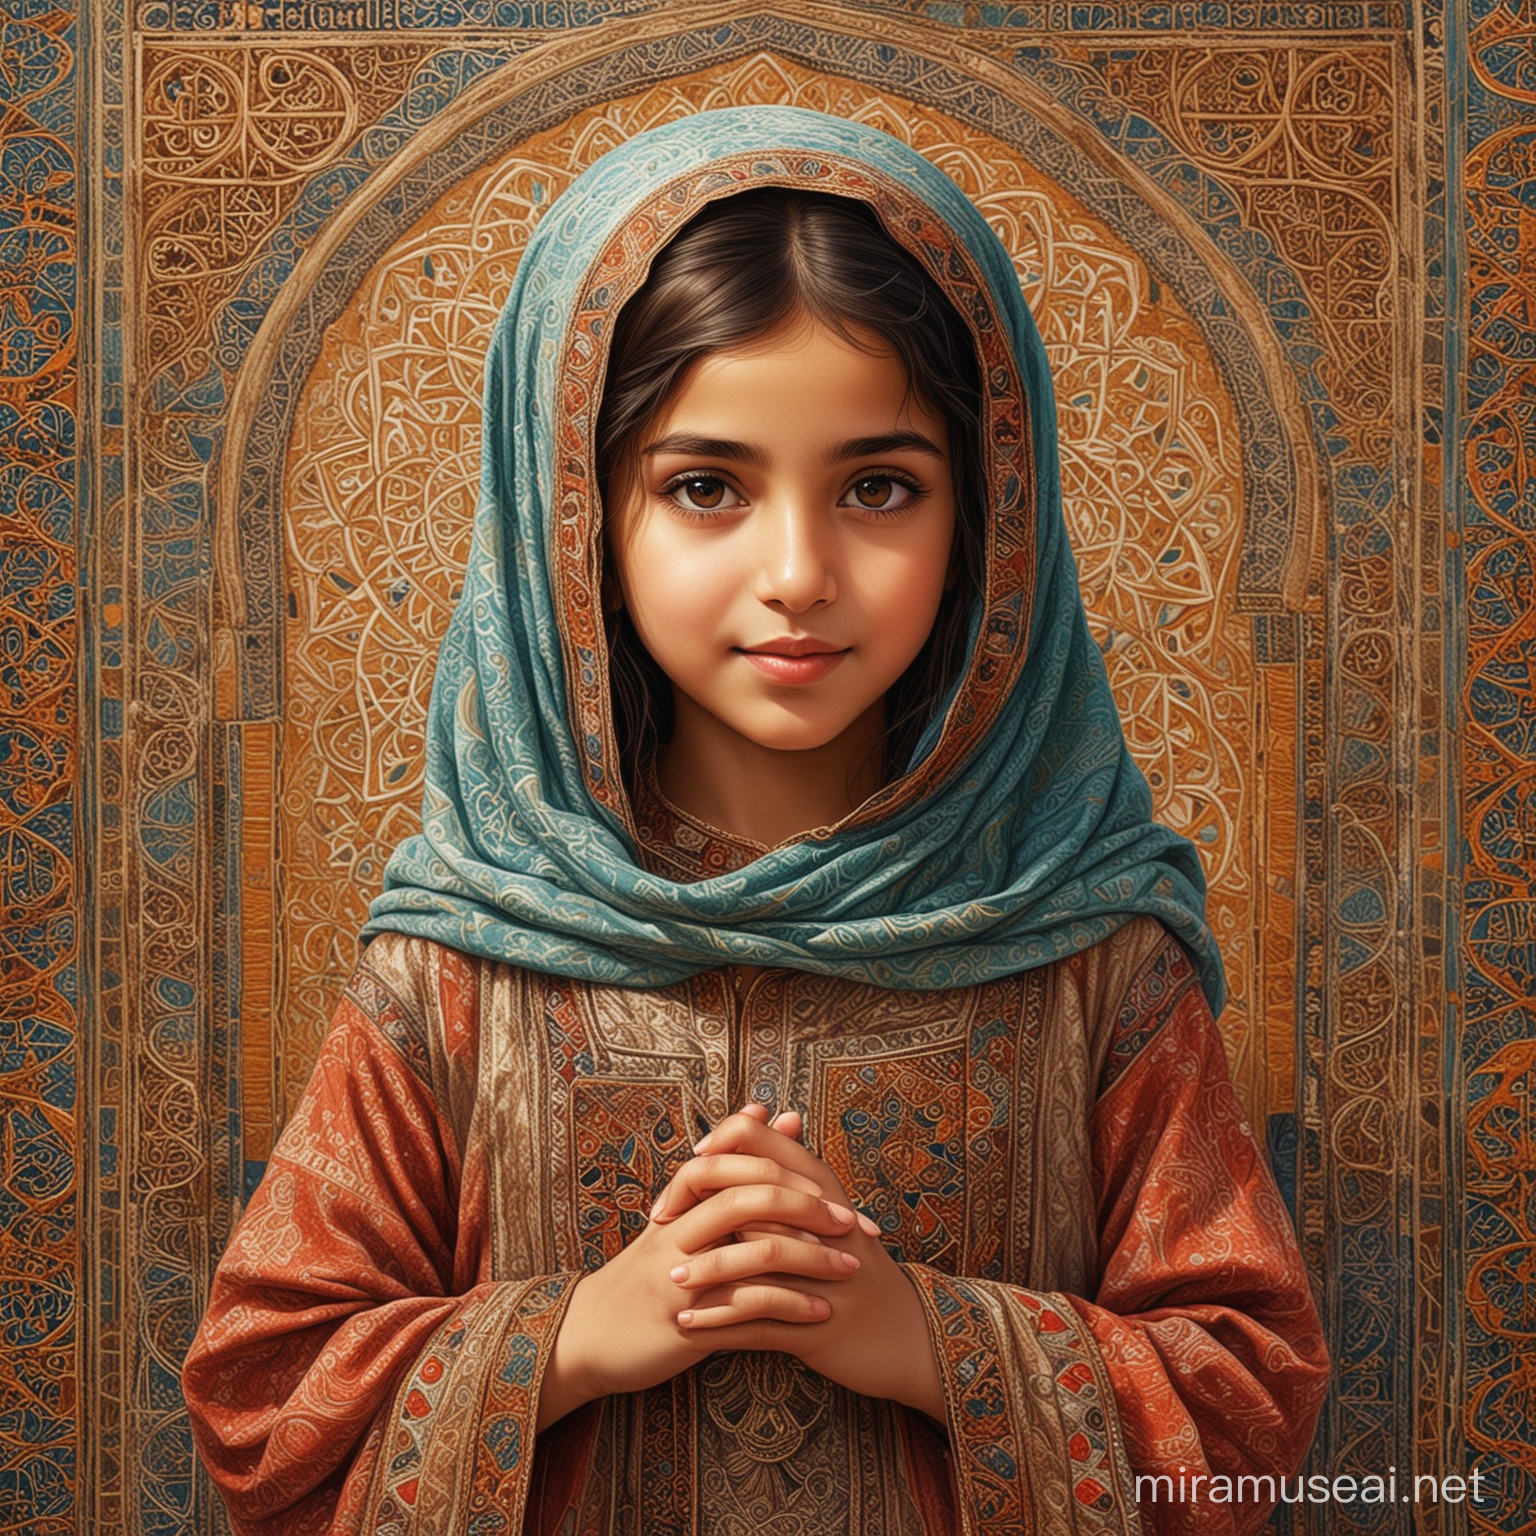 Adorable Arab Girl in Folk Attire amidst Arabic Patterns Surrealistic Fine Art Illustration